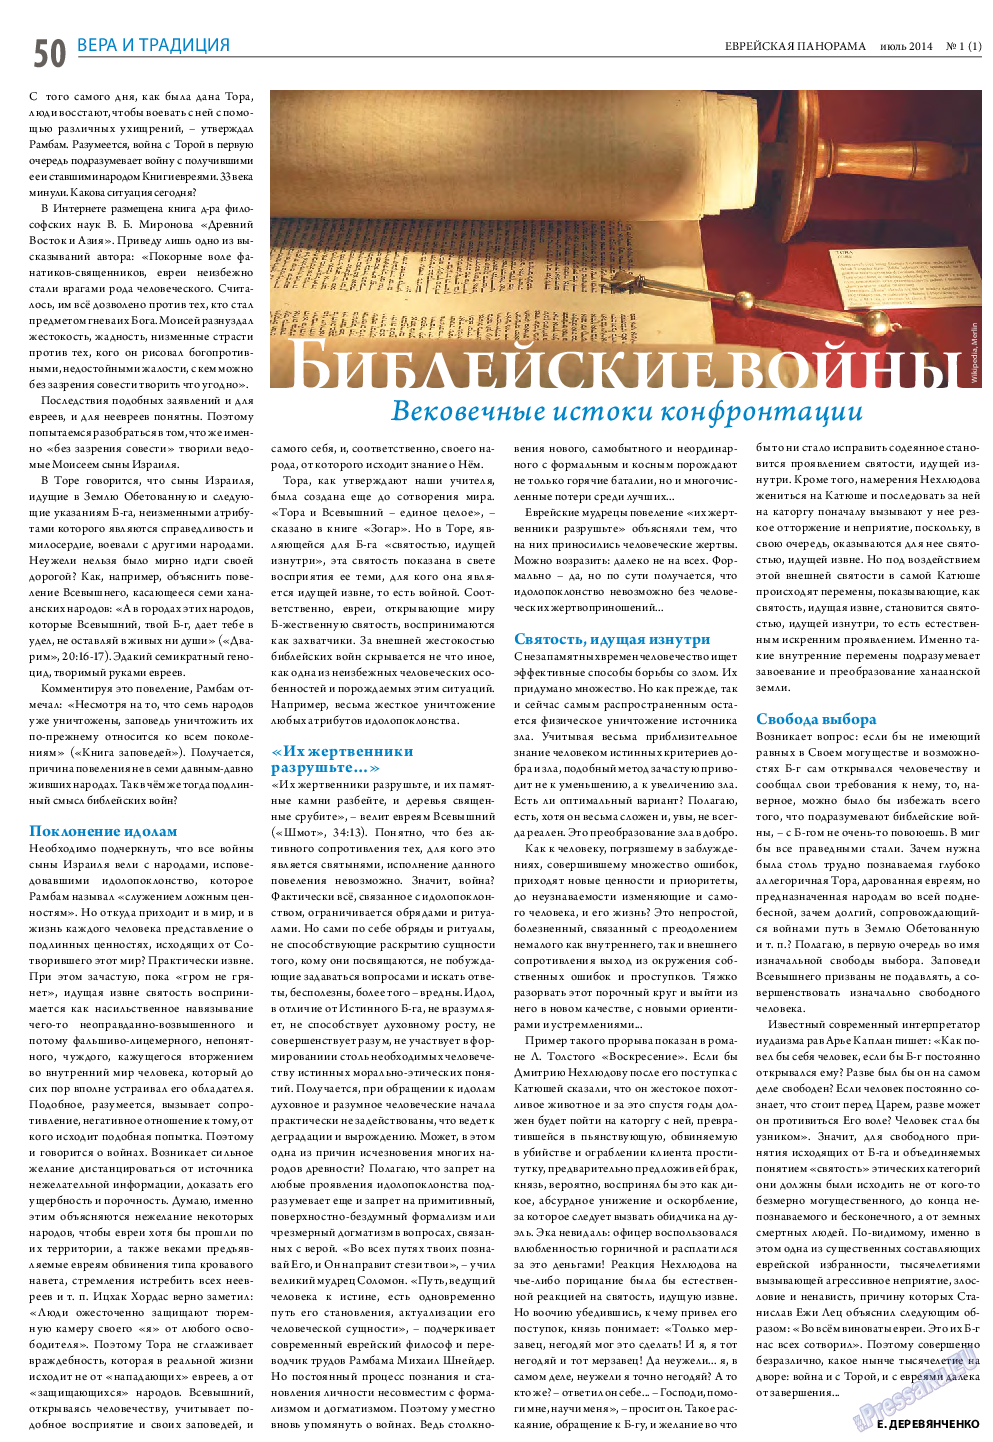 Еврейская панорама, газета. 2014 №1 стр.50